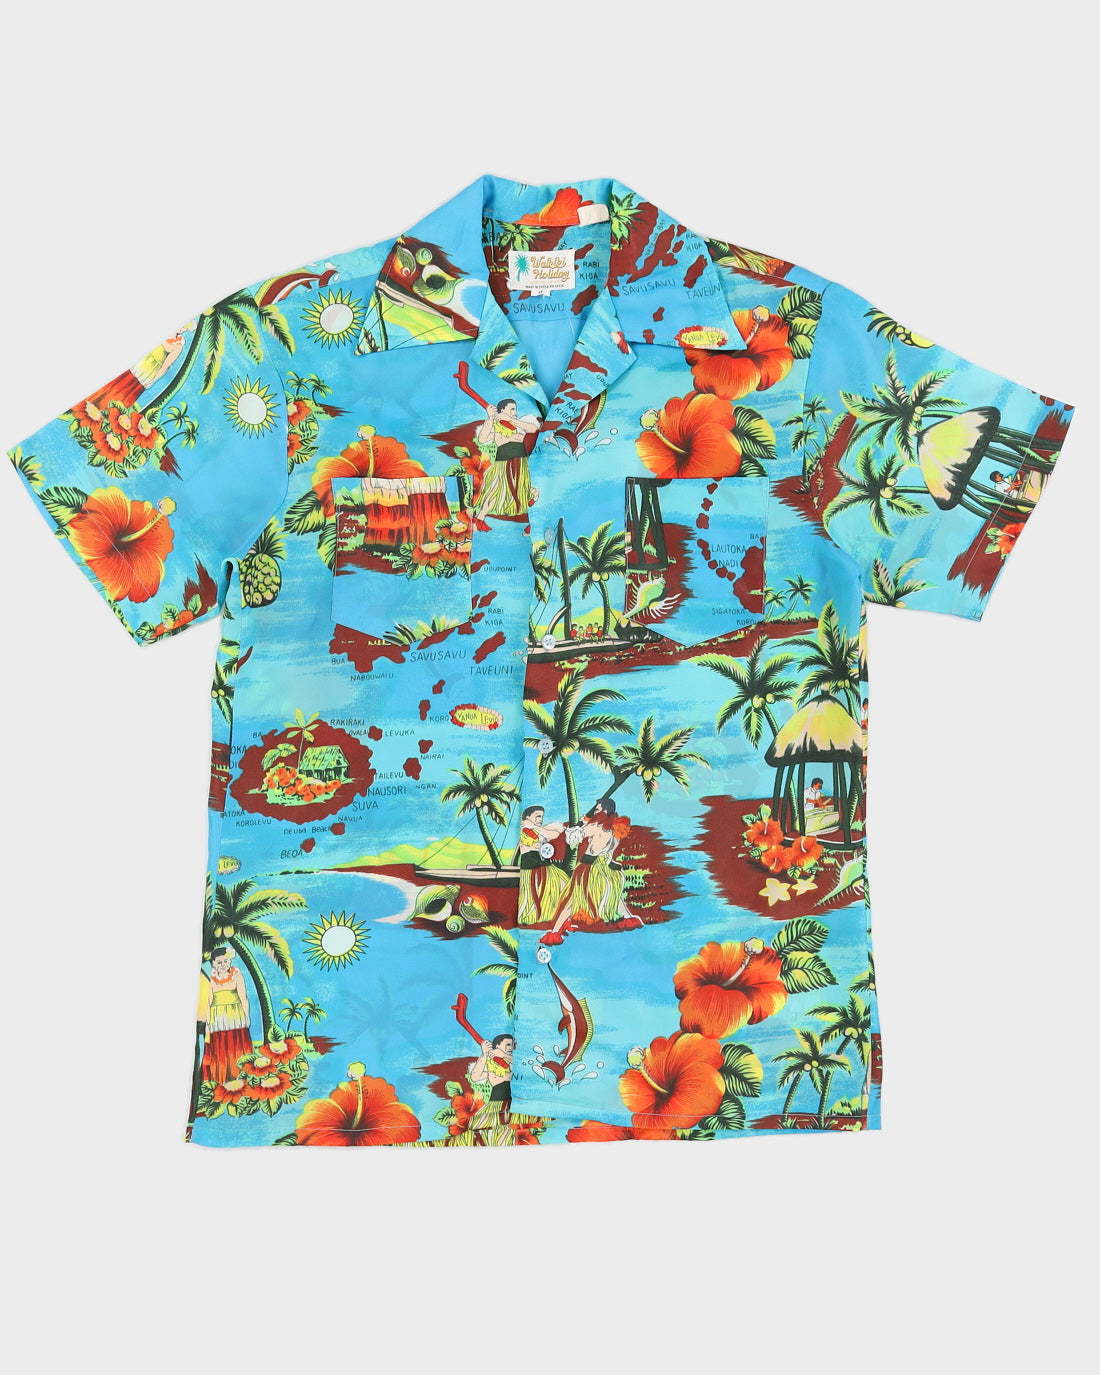 Vintage 1970s Blue Floral Hawaiian Shirt - M